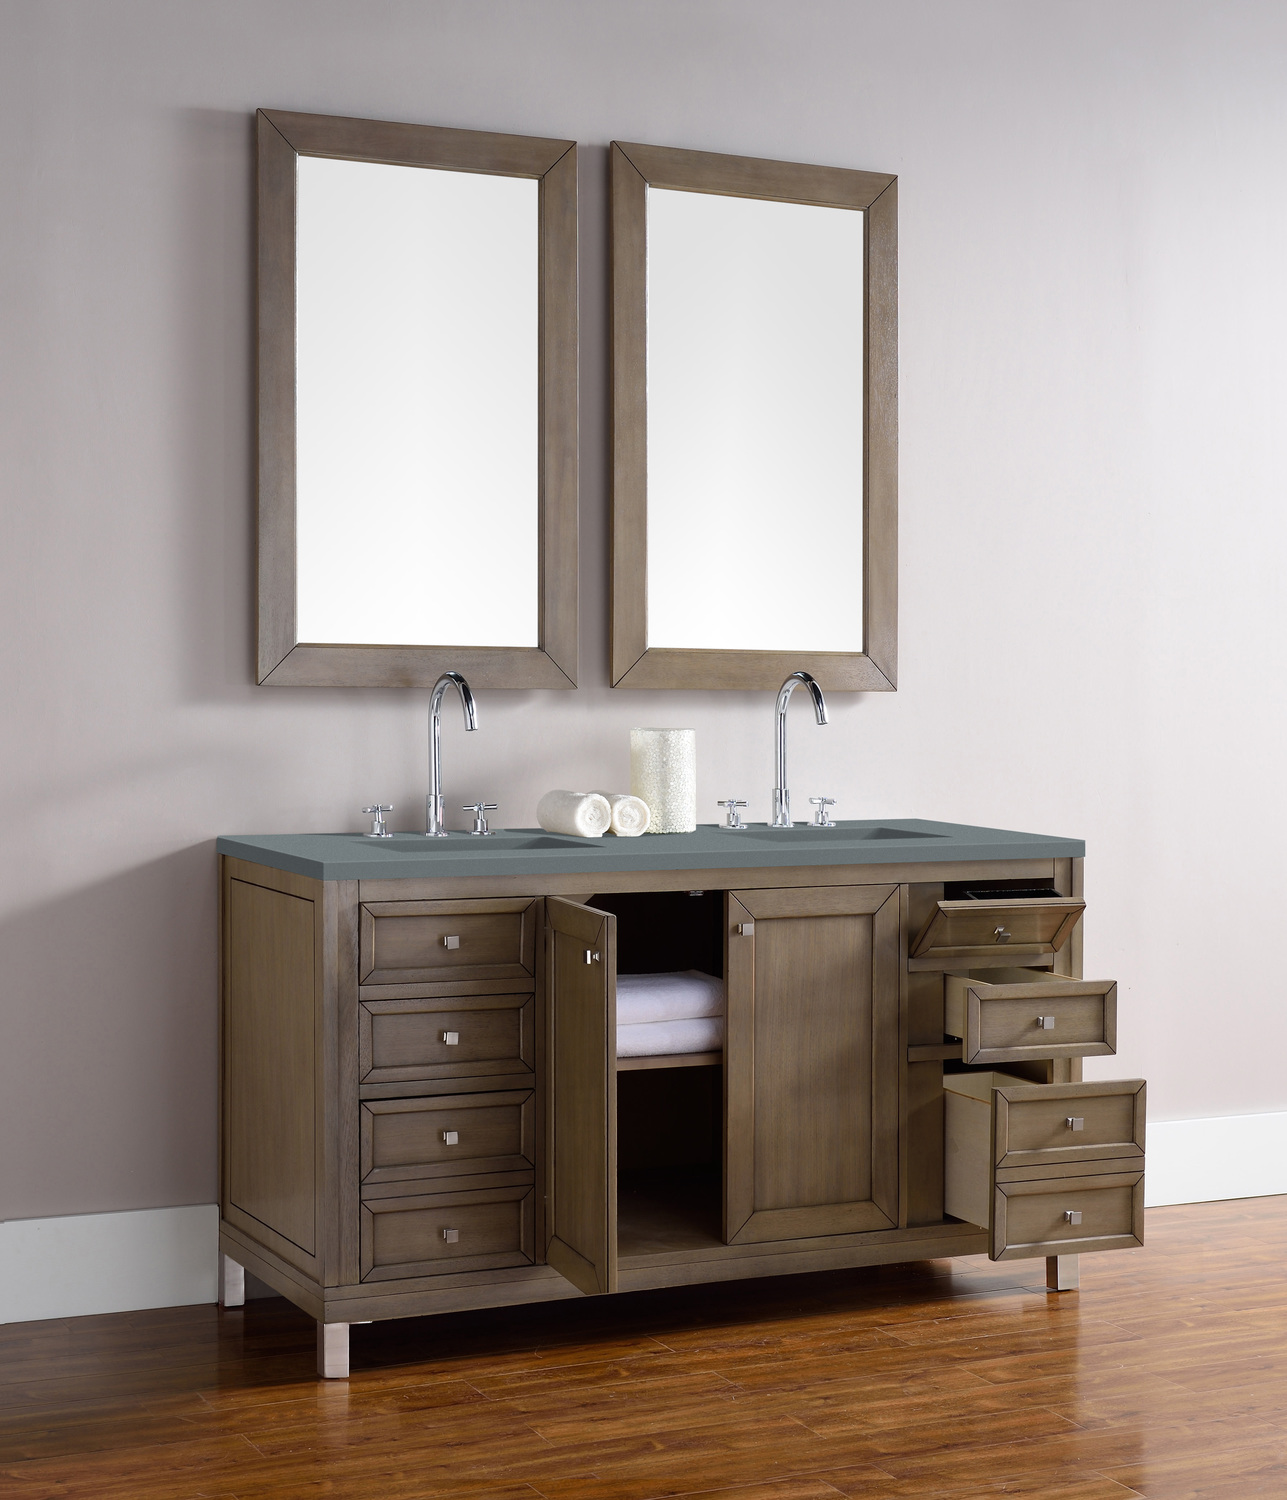 30 inch bathroom vanity base James Martin Vanity Whitewashed Walnut Contemporary/Modern, Transitional